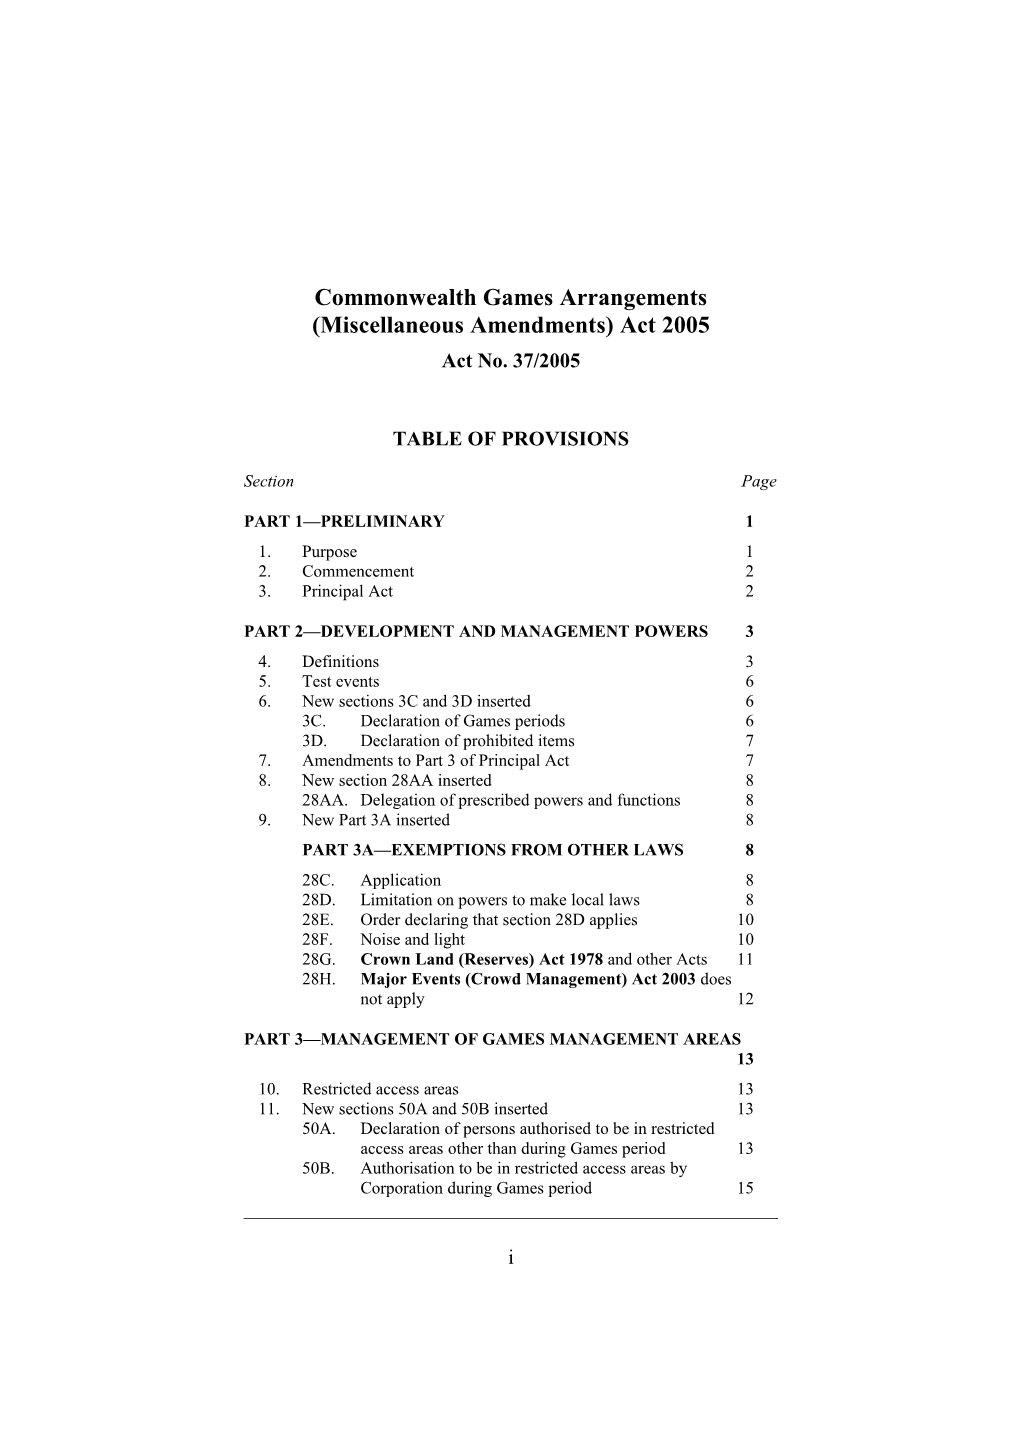 Commonwealth Games Arrangements (Miscellaneous Amendments) Act 2005